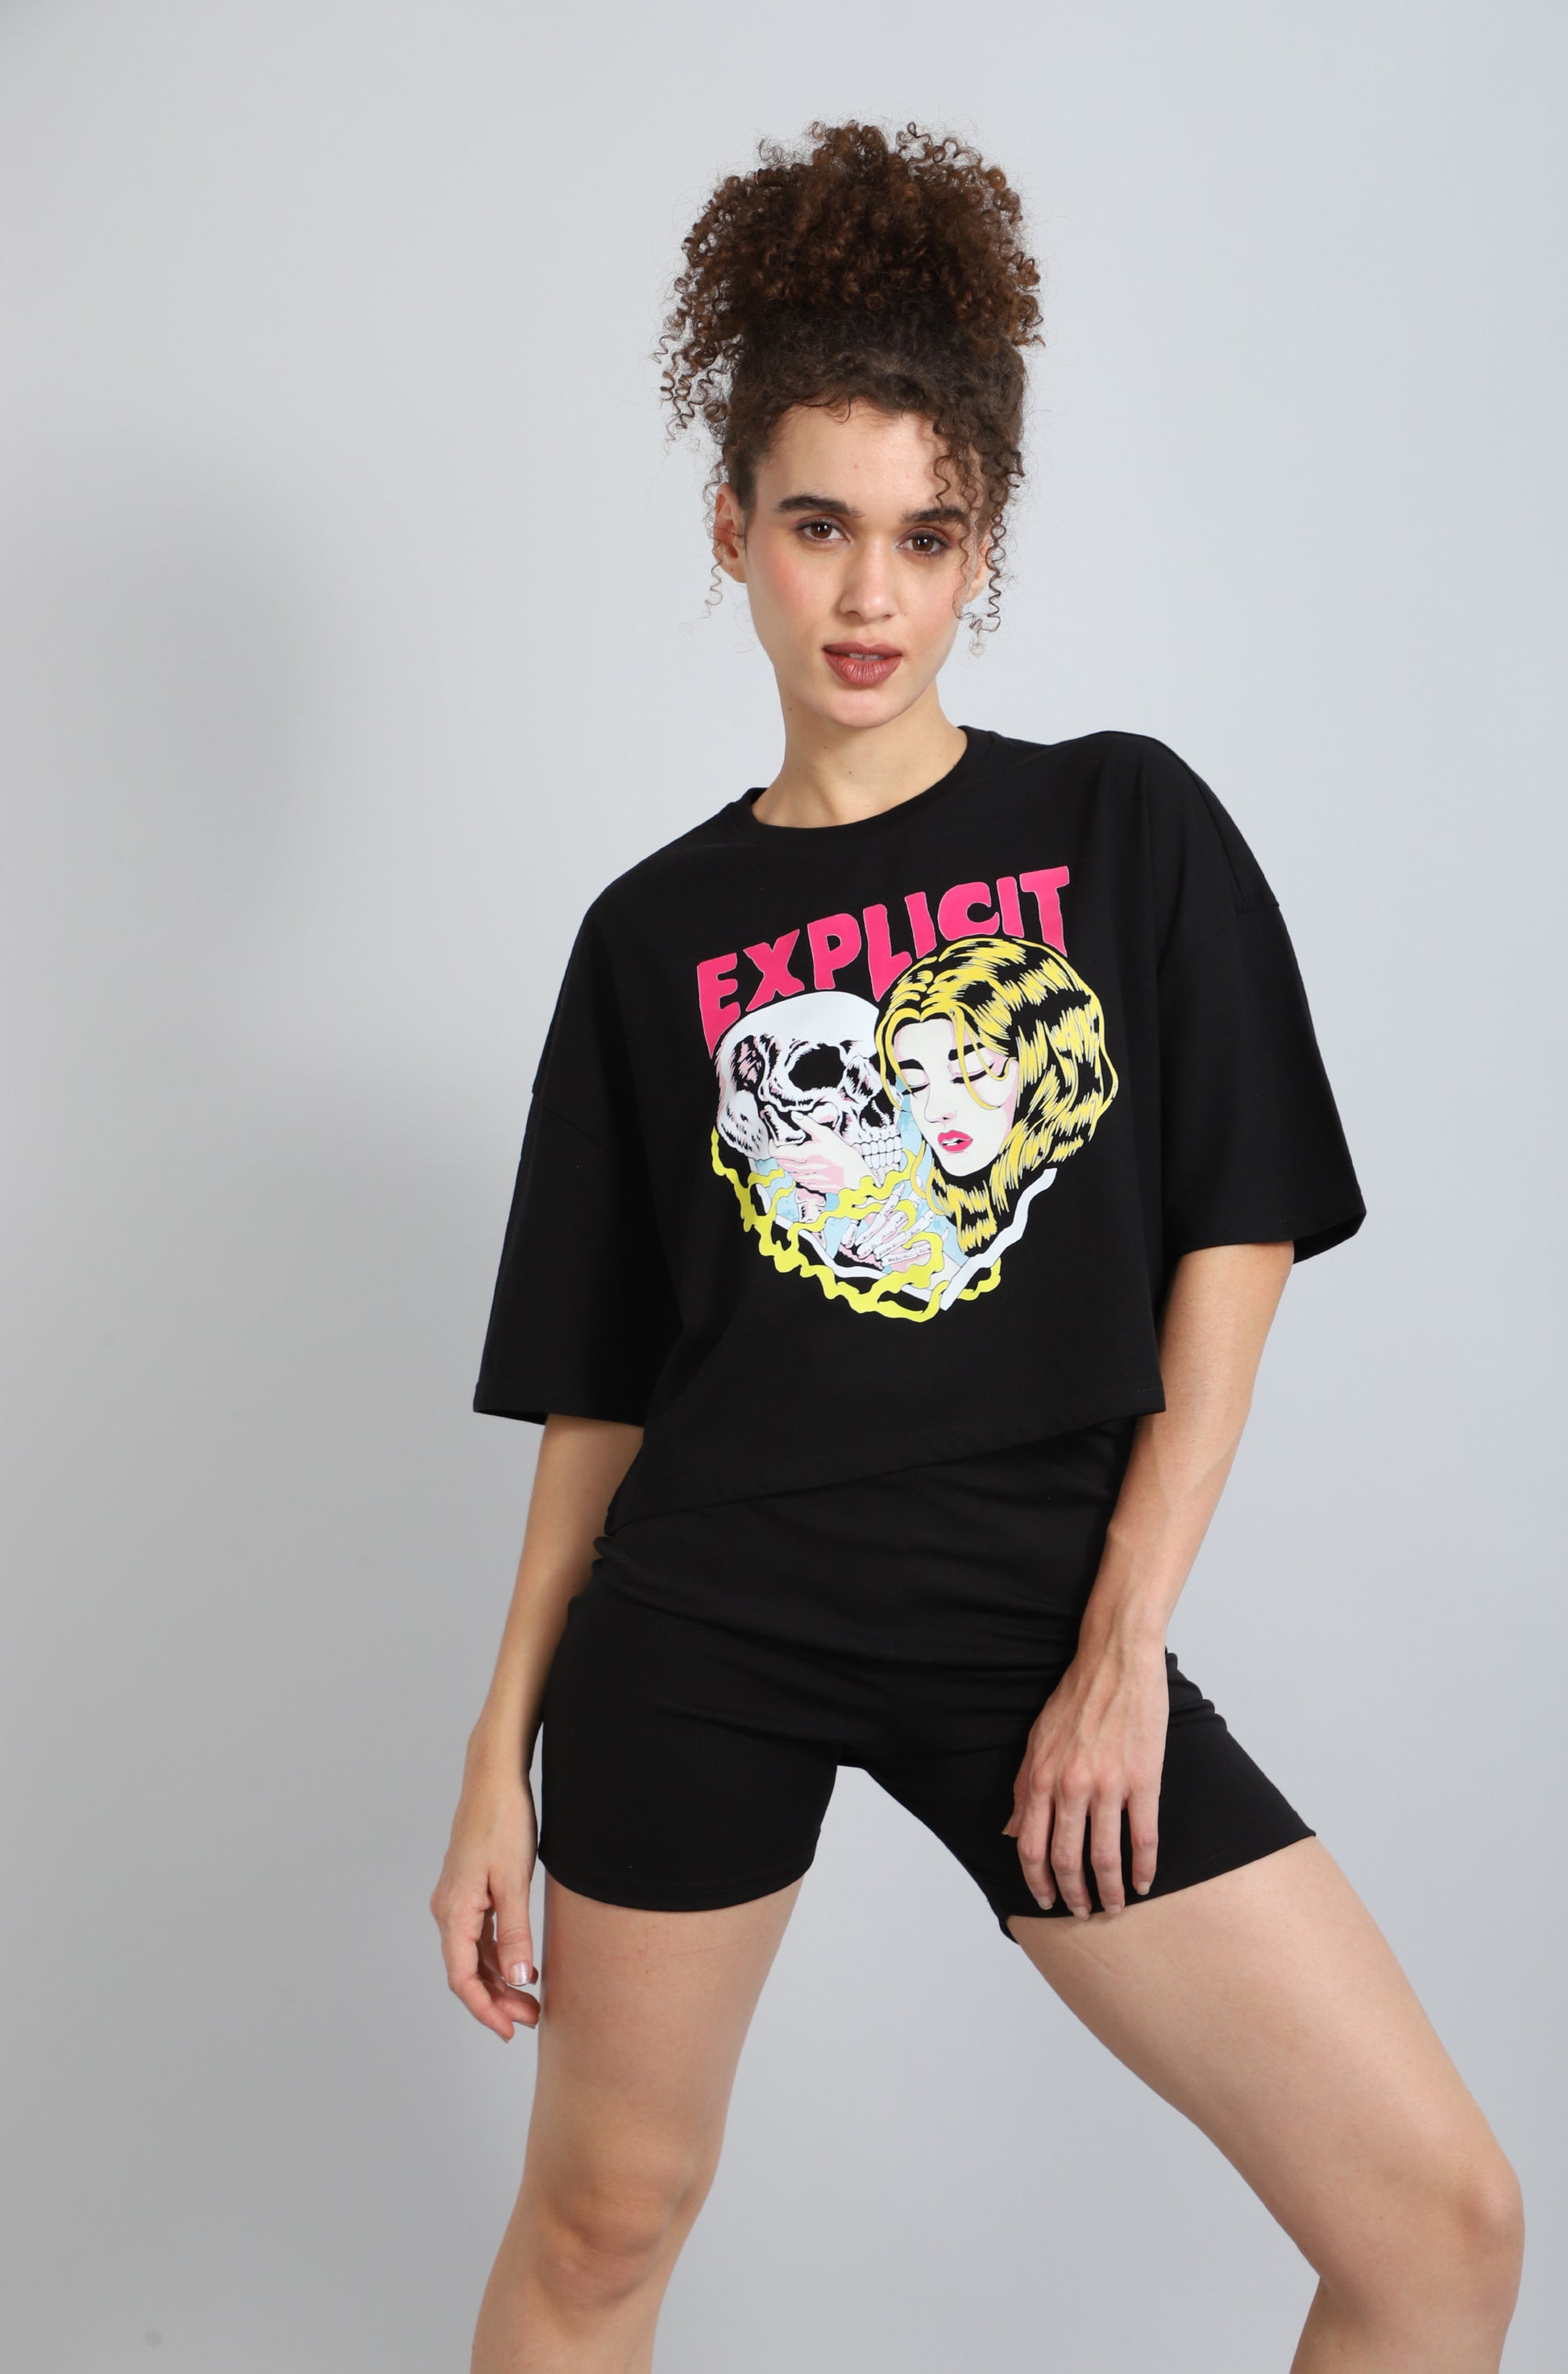 explicit black tshirt for women